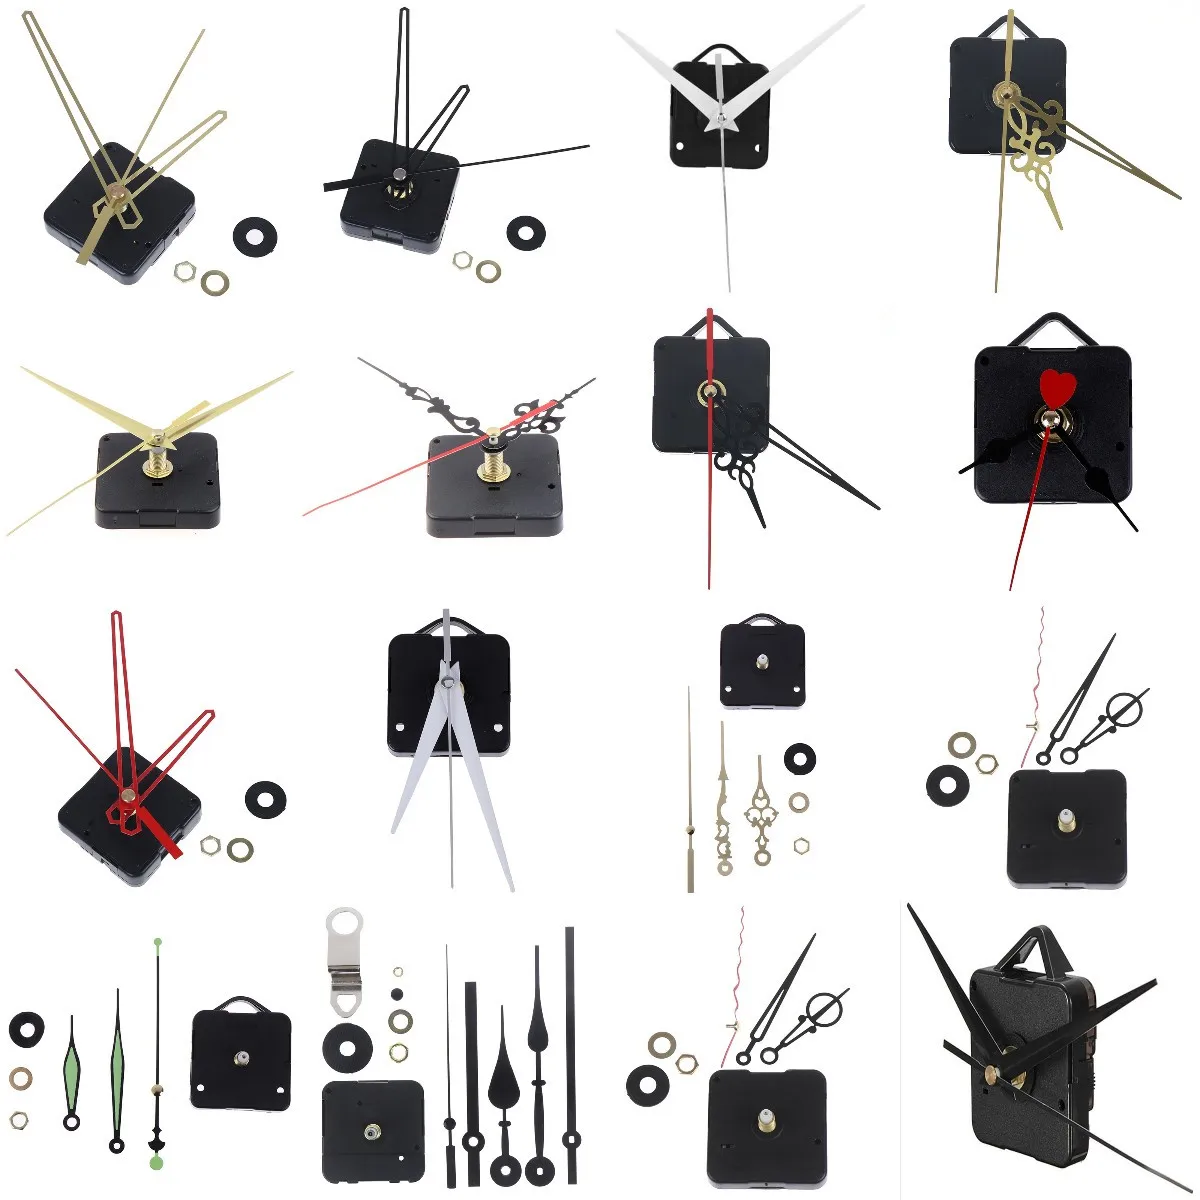 

50 Types Quartz Clock Repair Movement +Hands For DIY Silent Large Wall Clock Repair Clock Mechanism Part